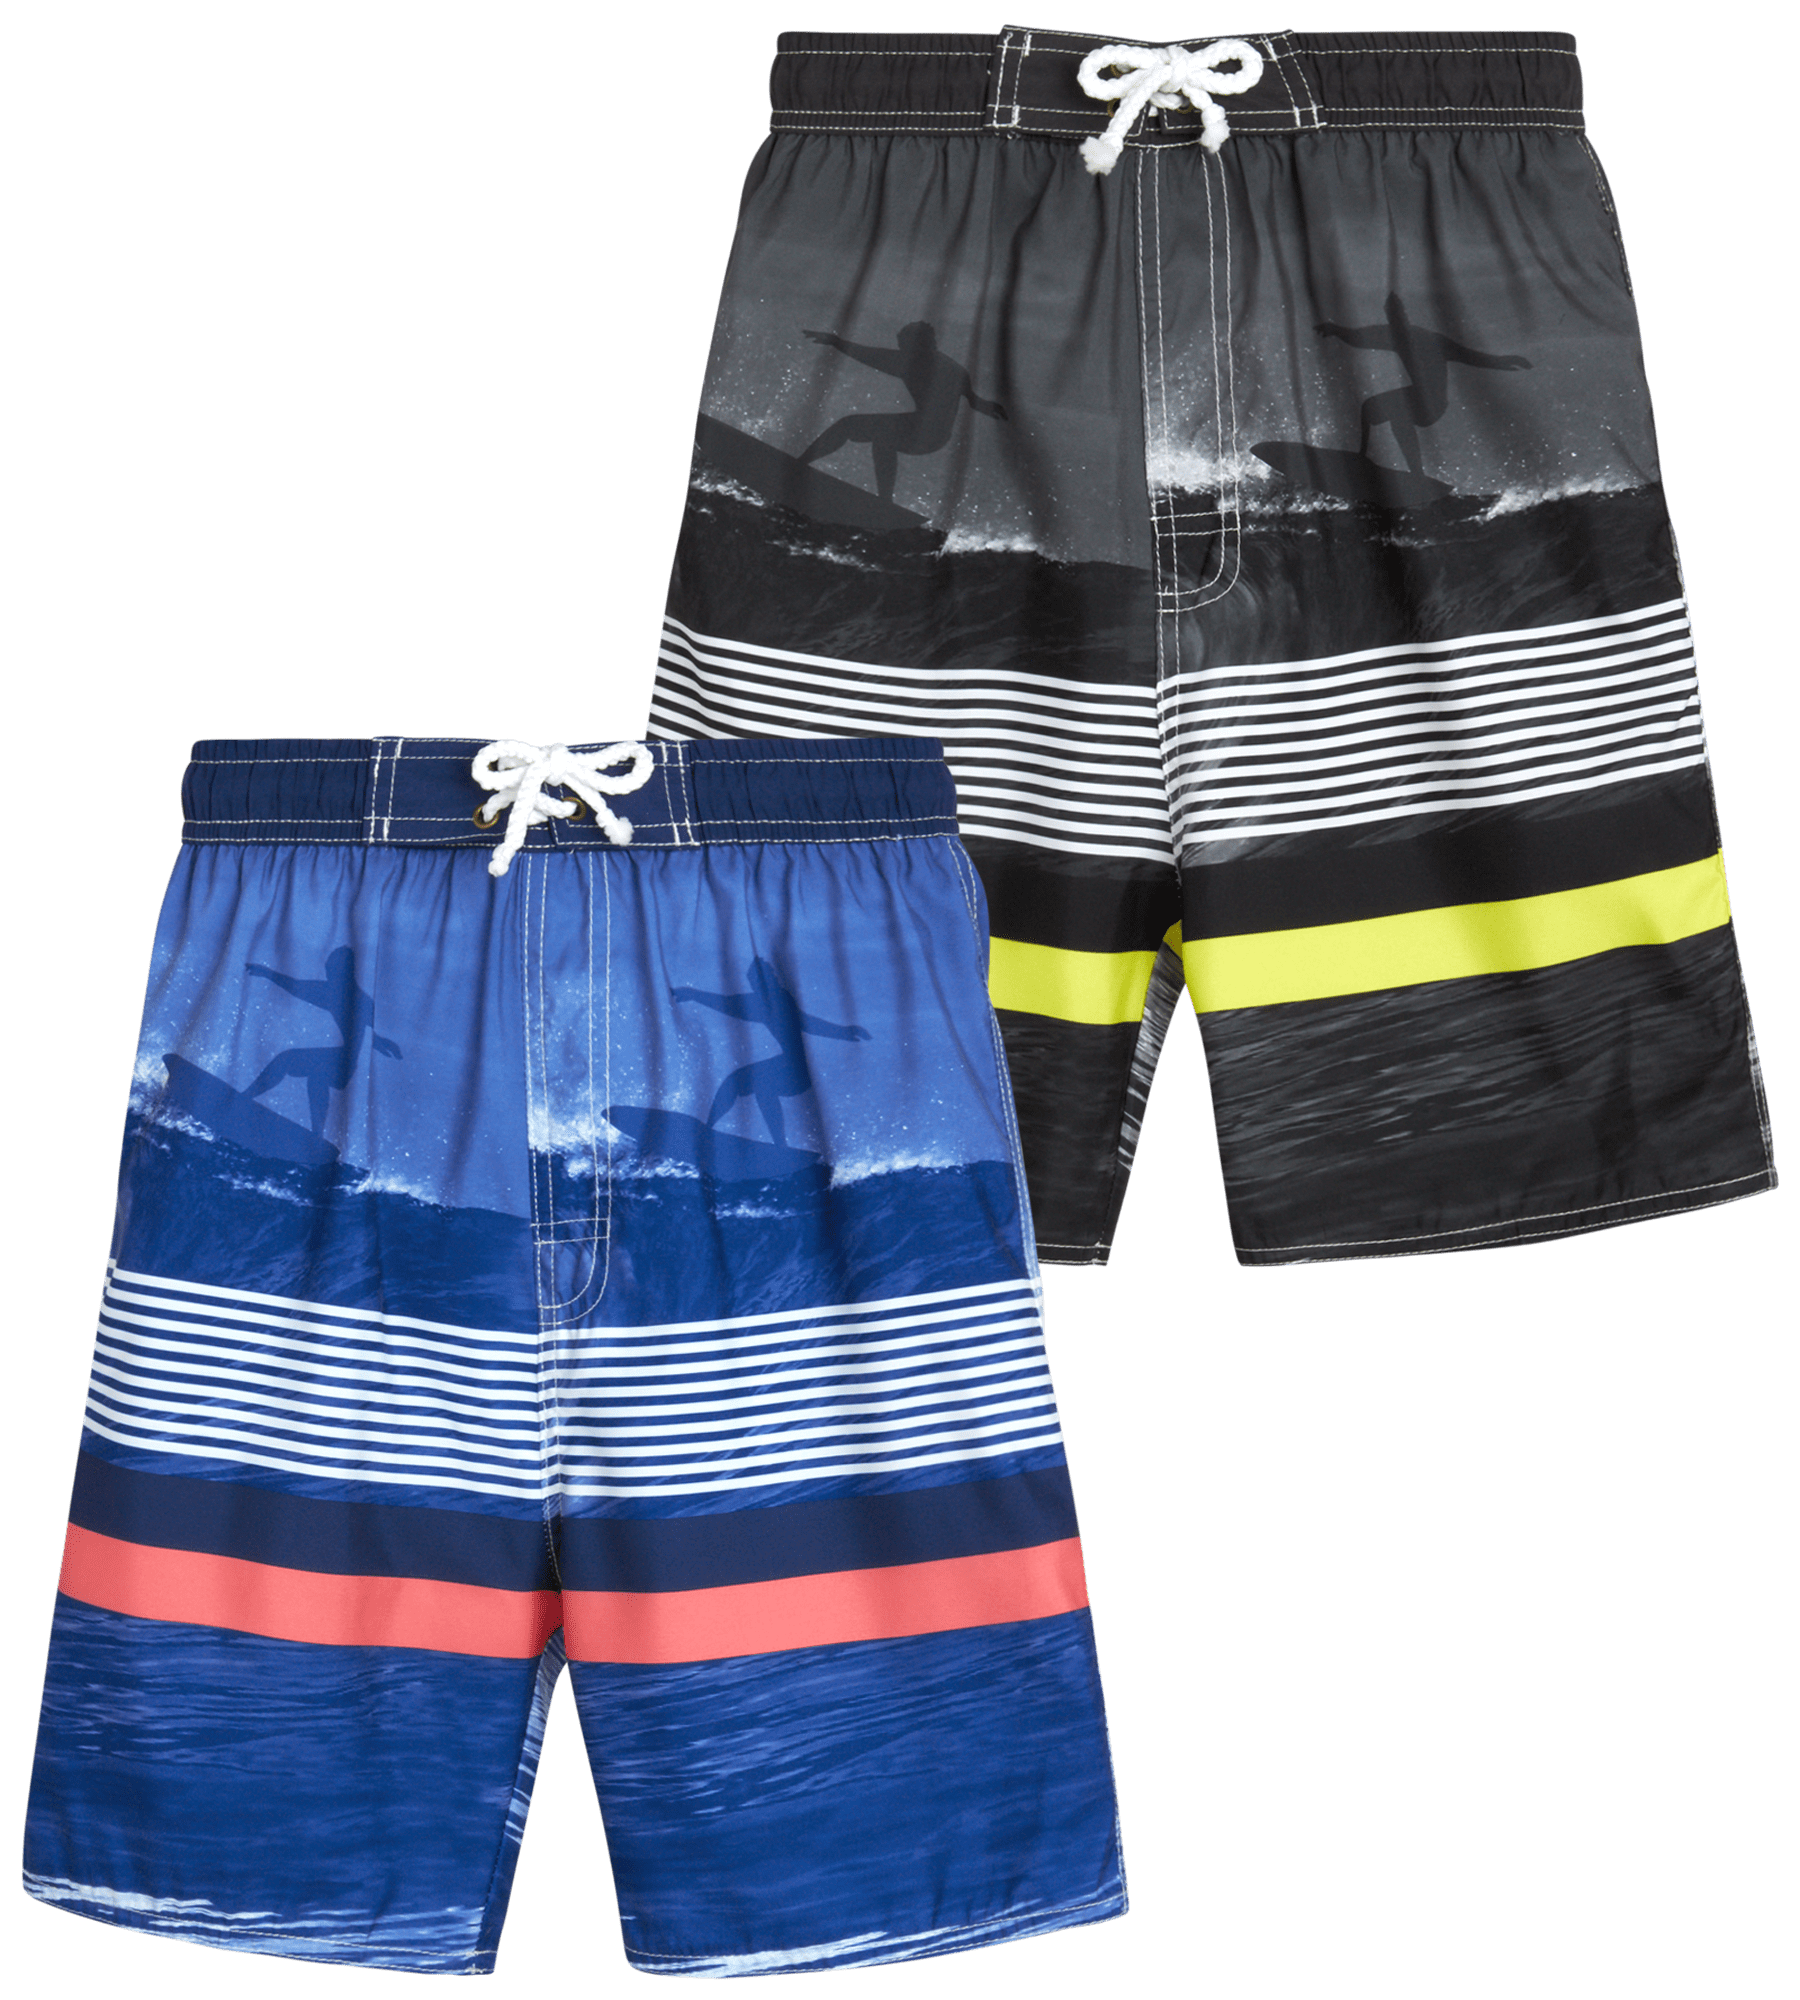 Quad Seven Boys' Swim Trunks - 2 Pack Striped Quick Dry Board Shorts ...